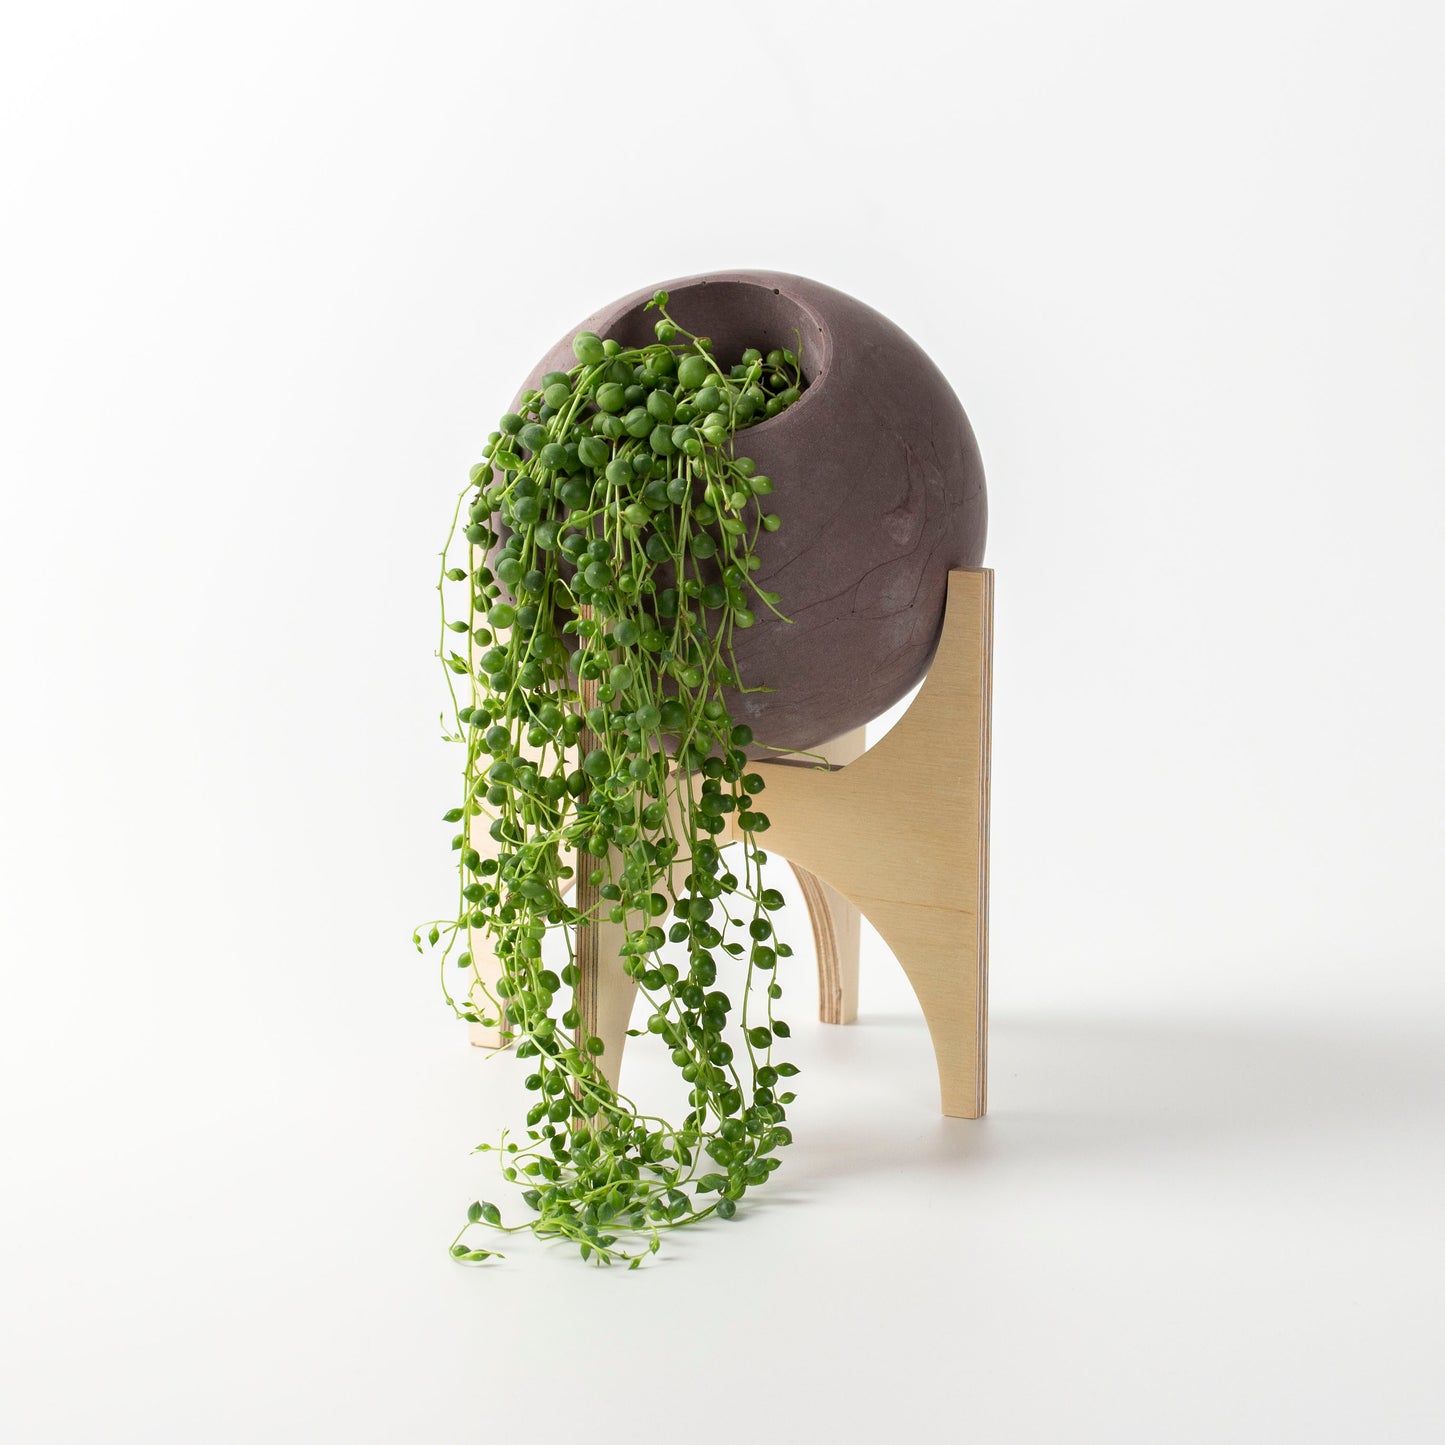 Round Concrete Flower Pot With Wooden Leg